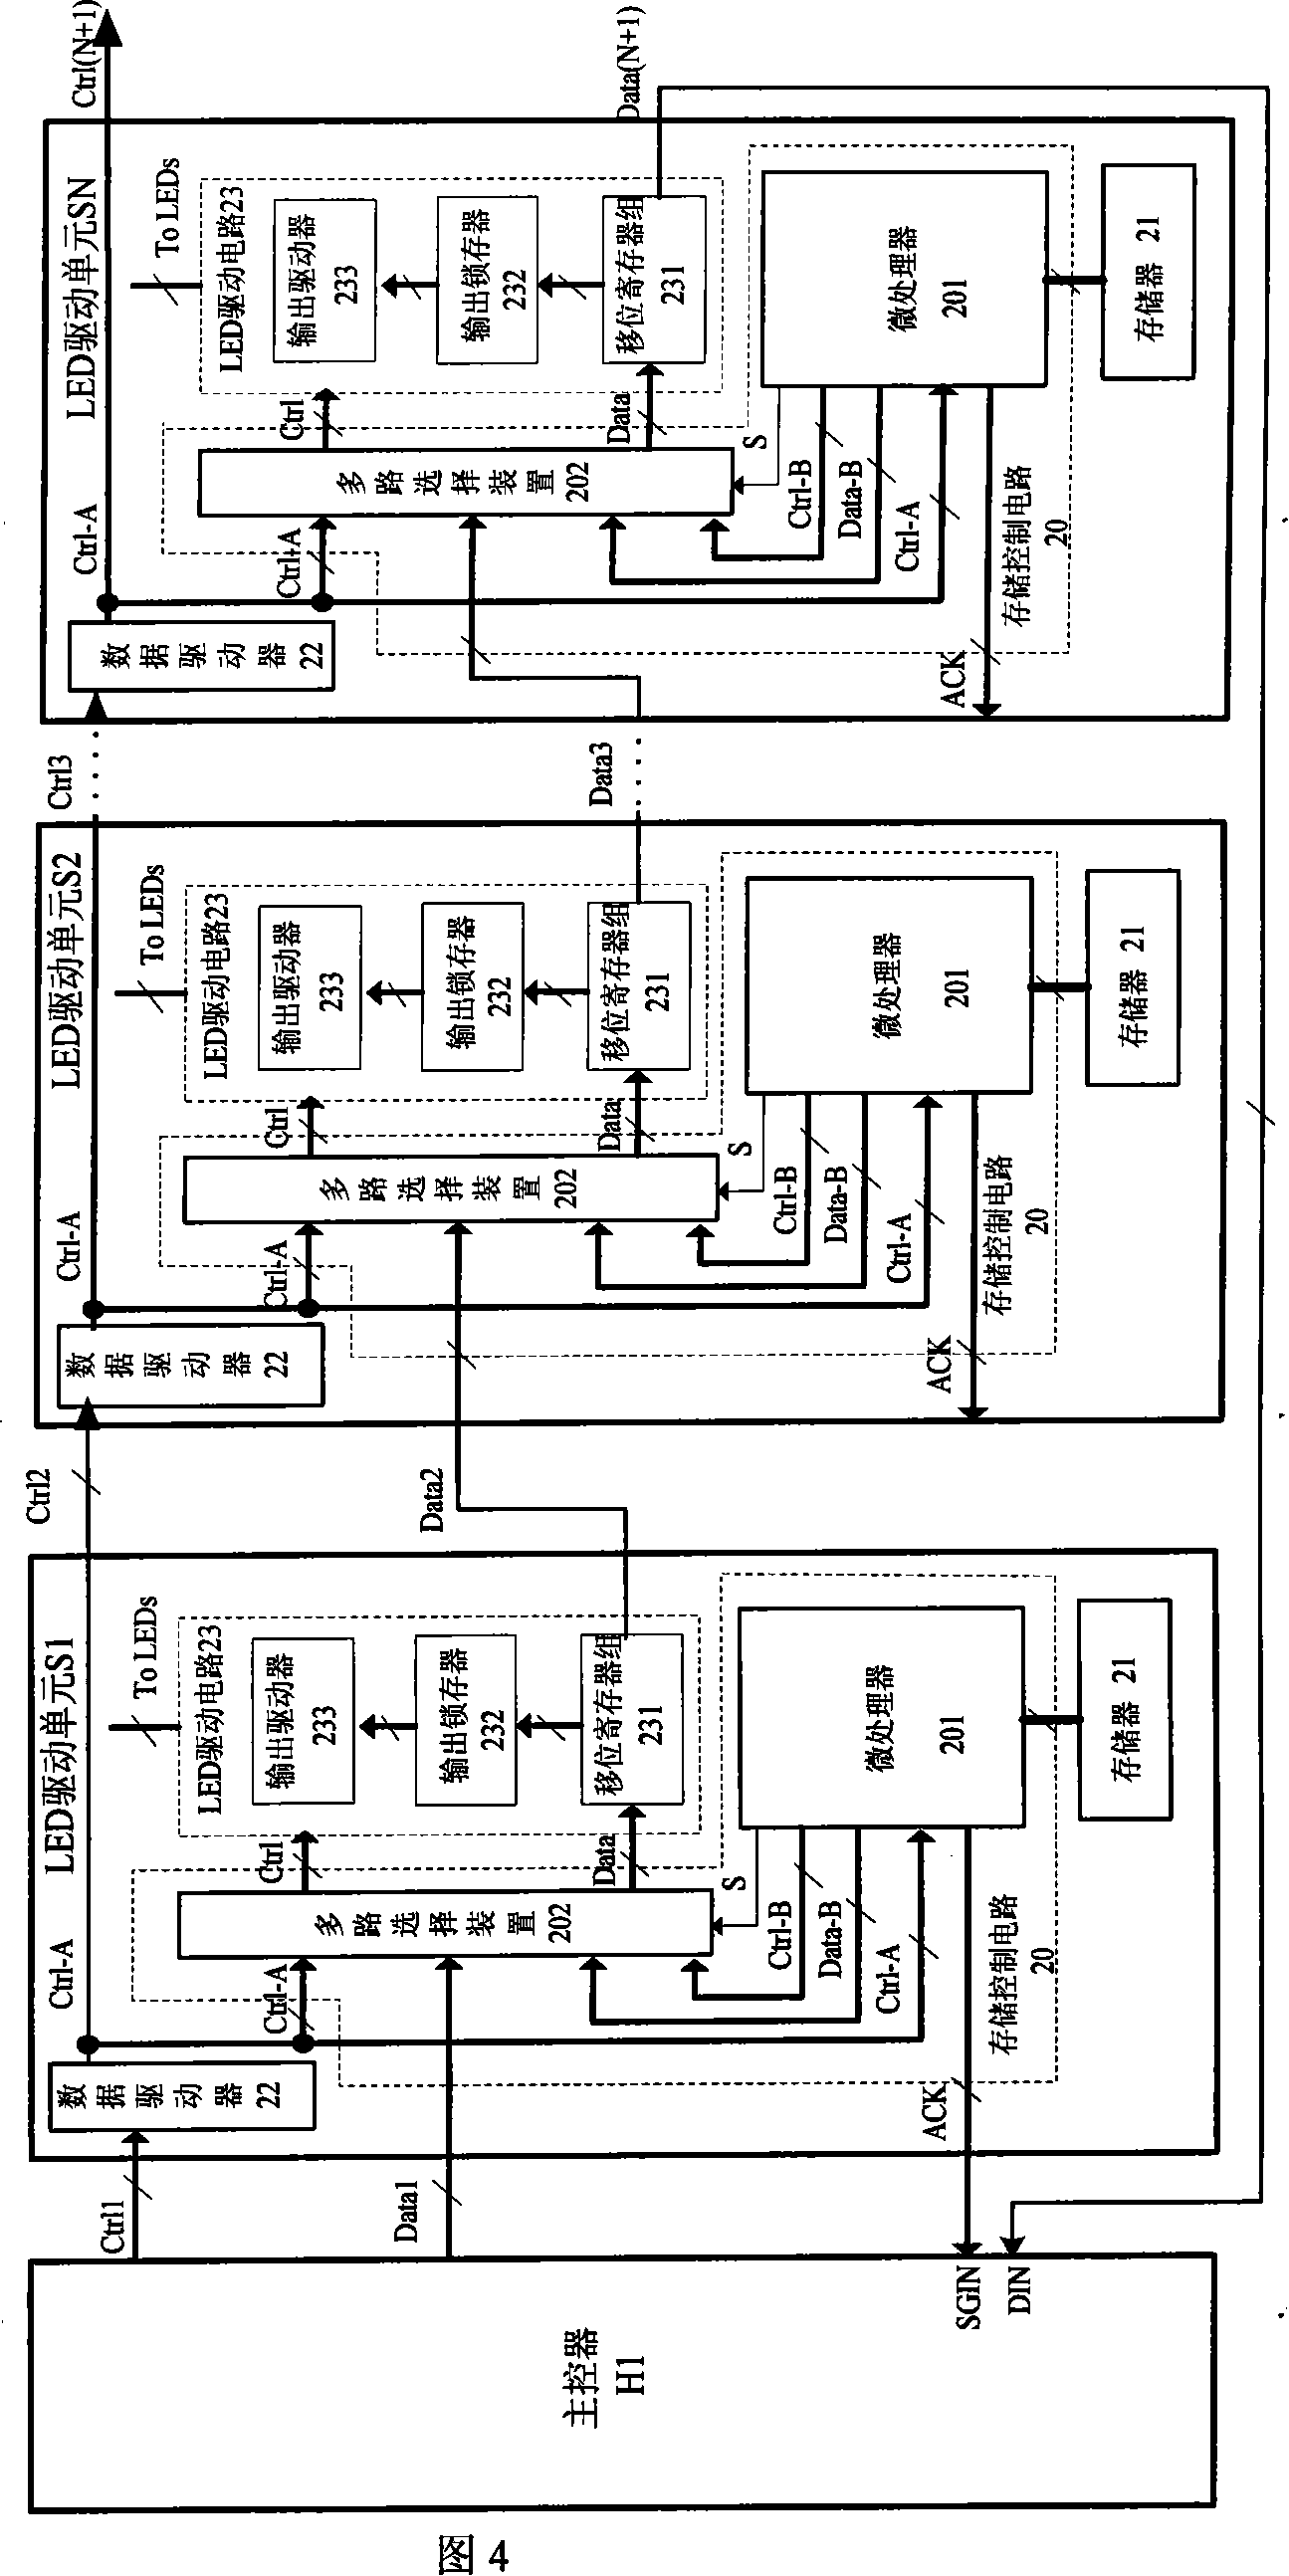 LED matrix screen parameter calibration system and method